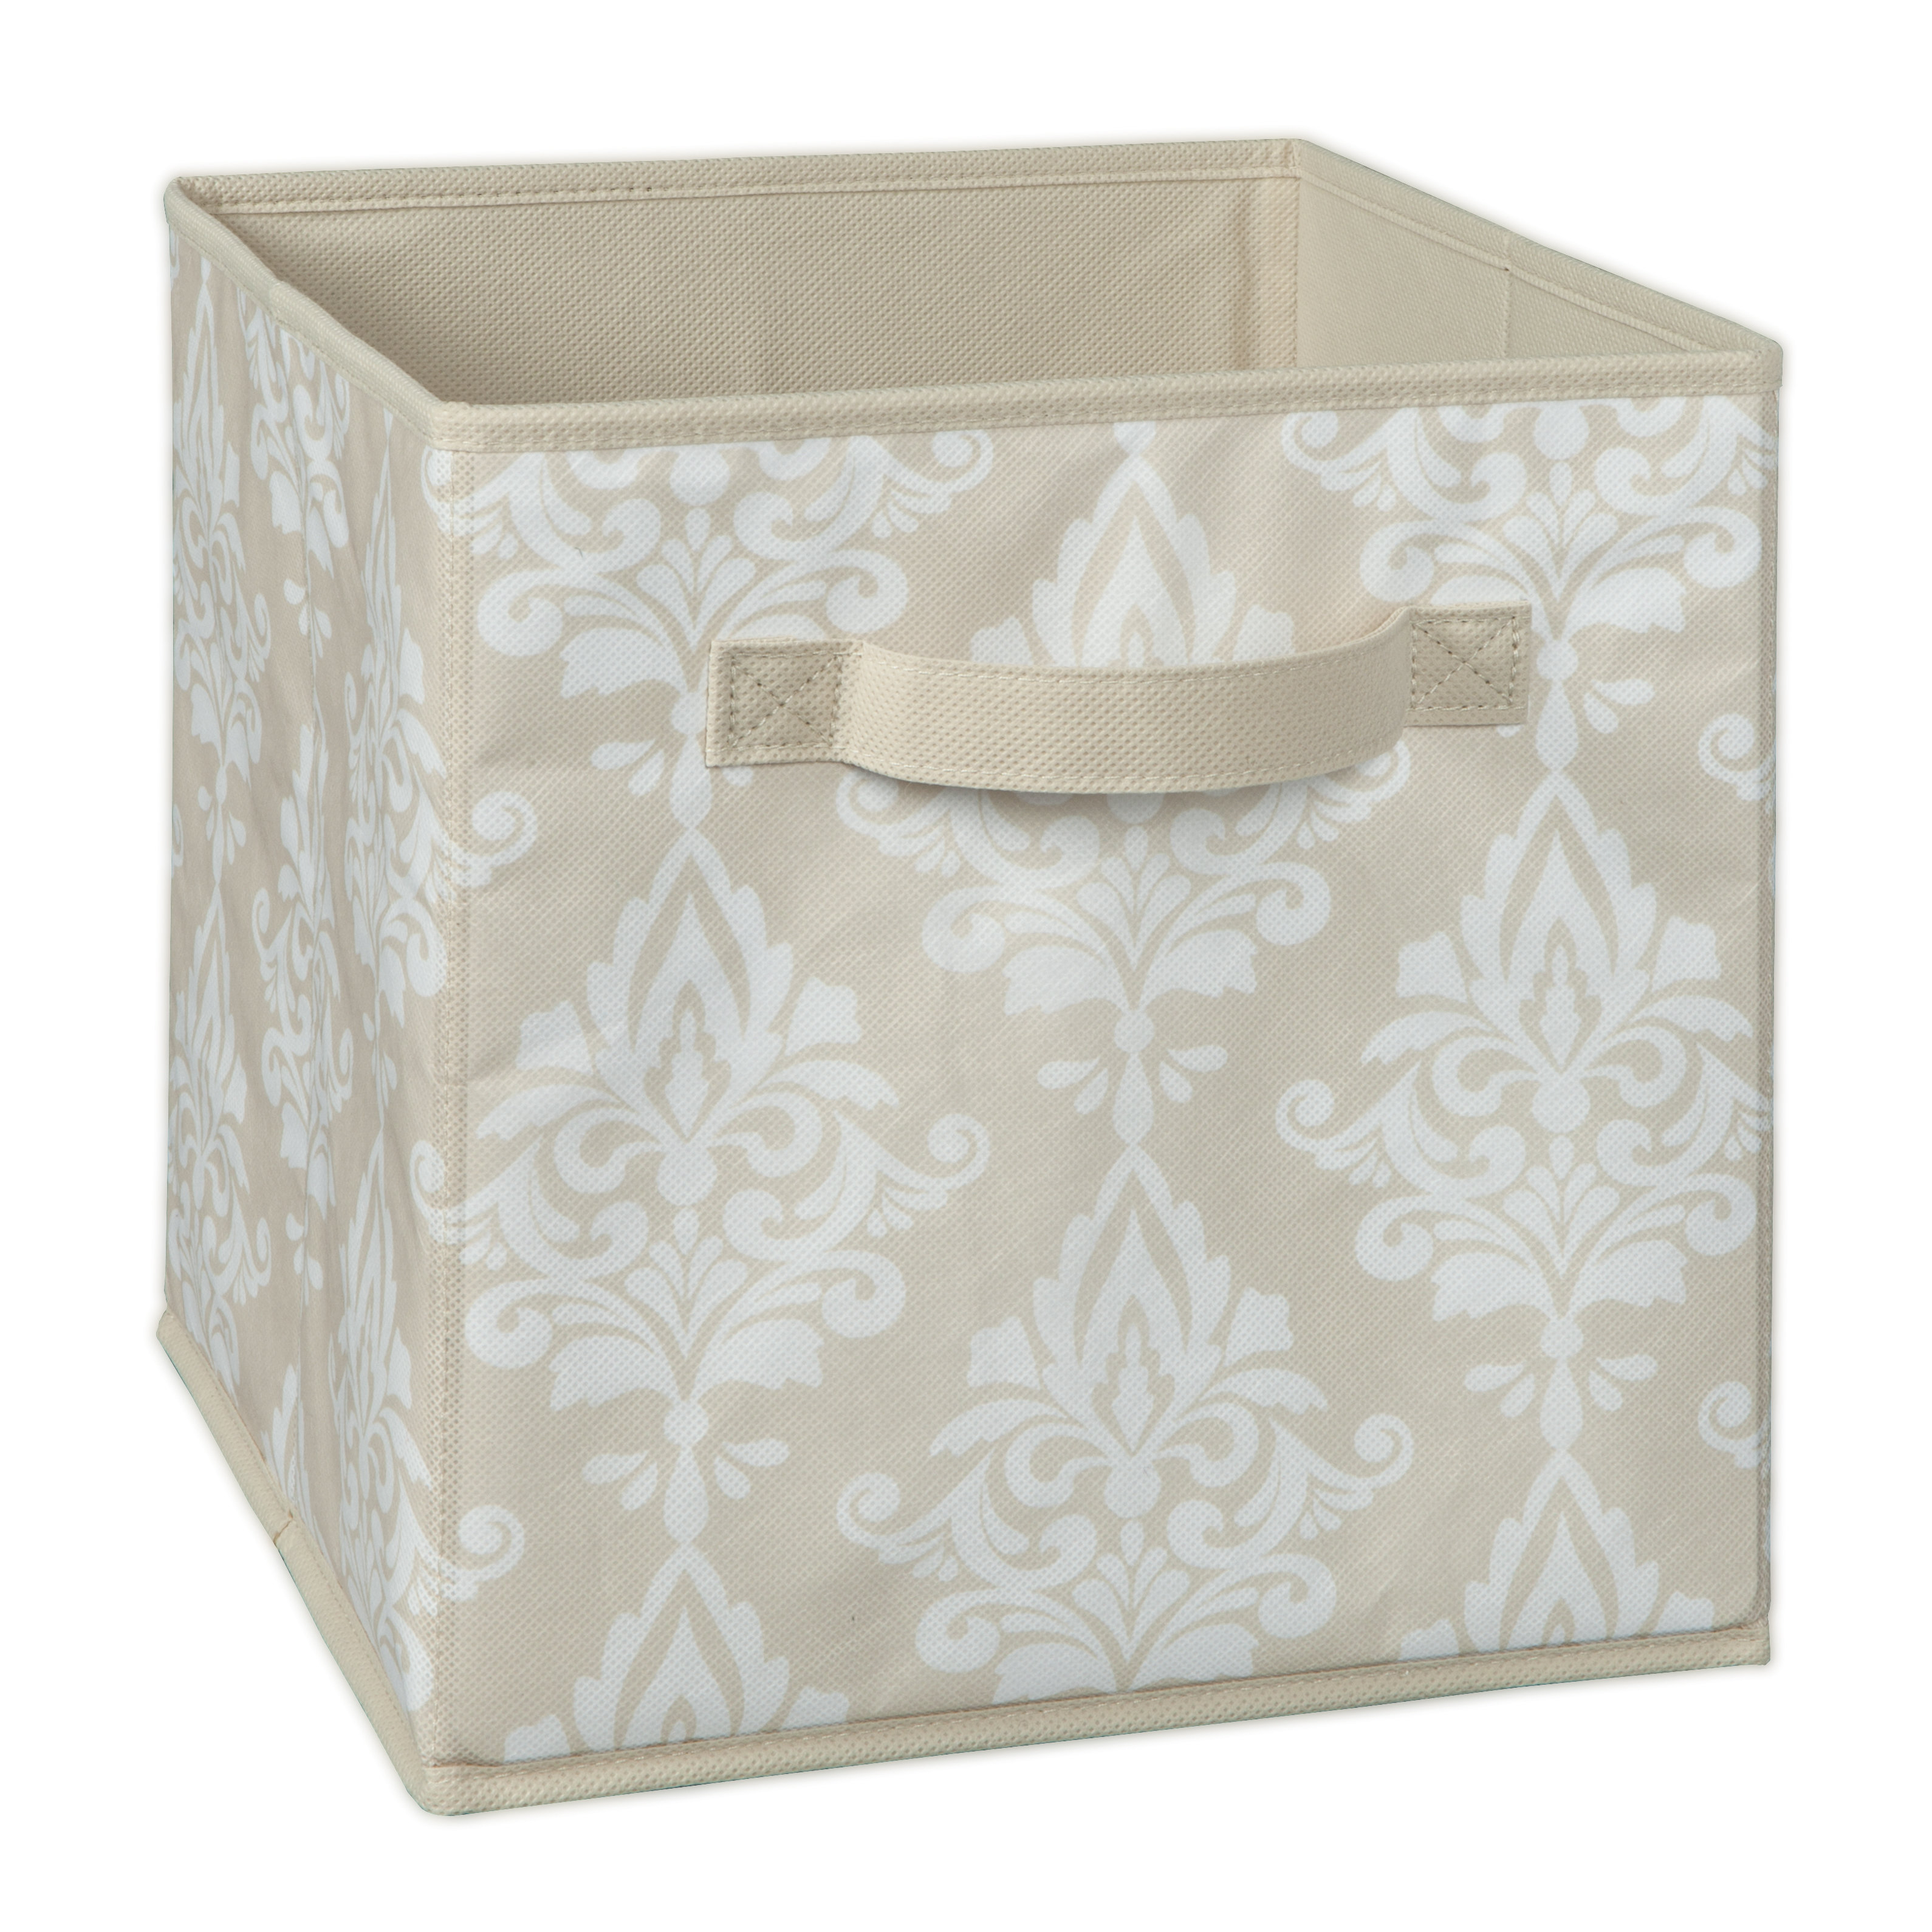 Closetmaid Cubeicals Fabric Storage Bin Reviews Wayfair intended for dimensions 3180 X 3180